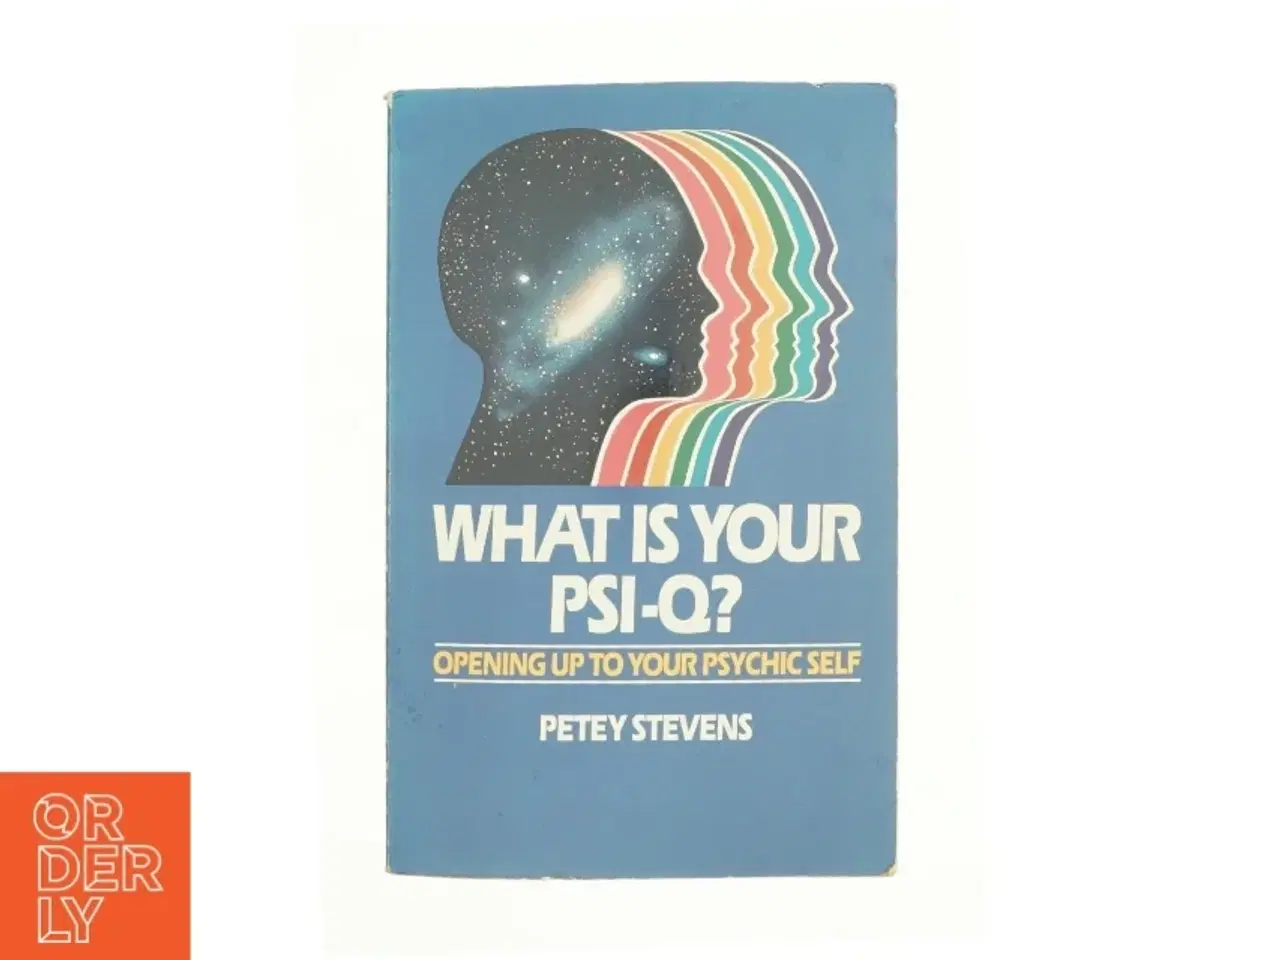 Billede 1 - What Is Your PSI-Q?: Opening up to Your Psychic Self af Petey Stevens (Bog)